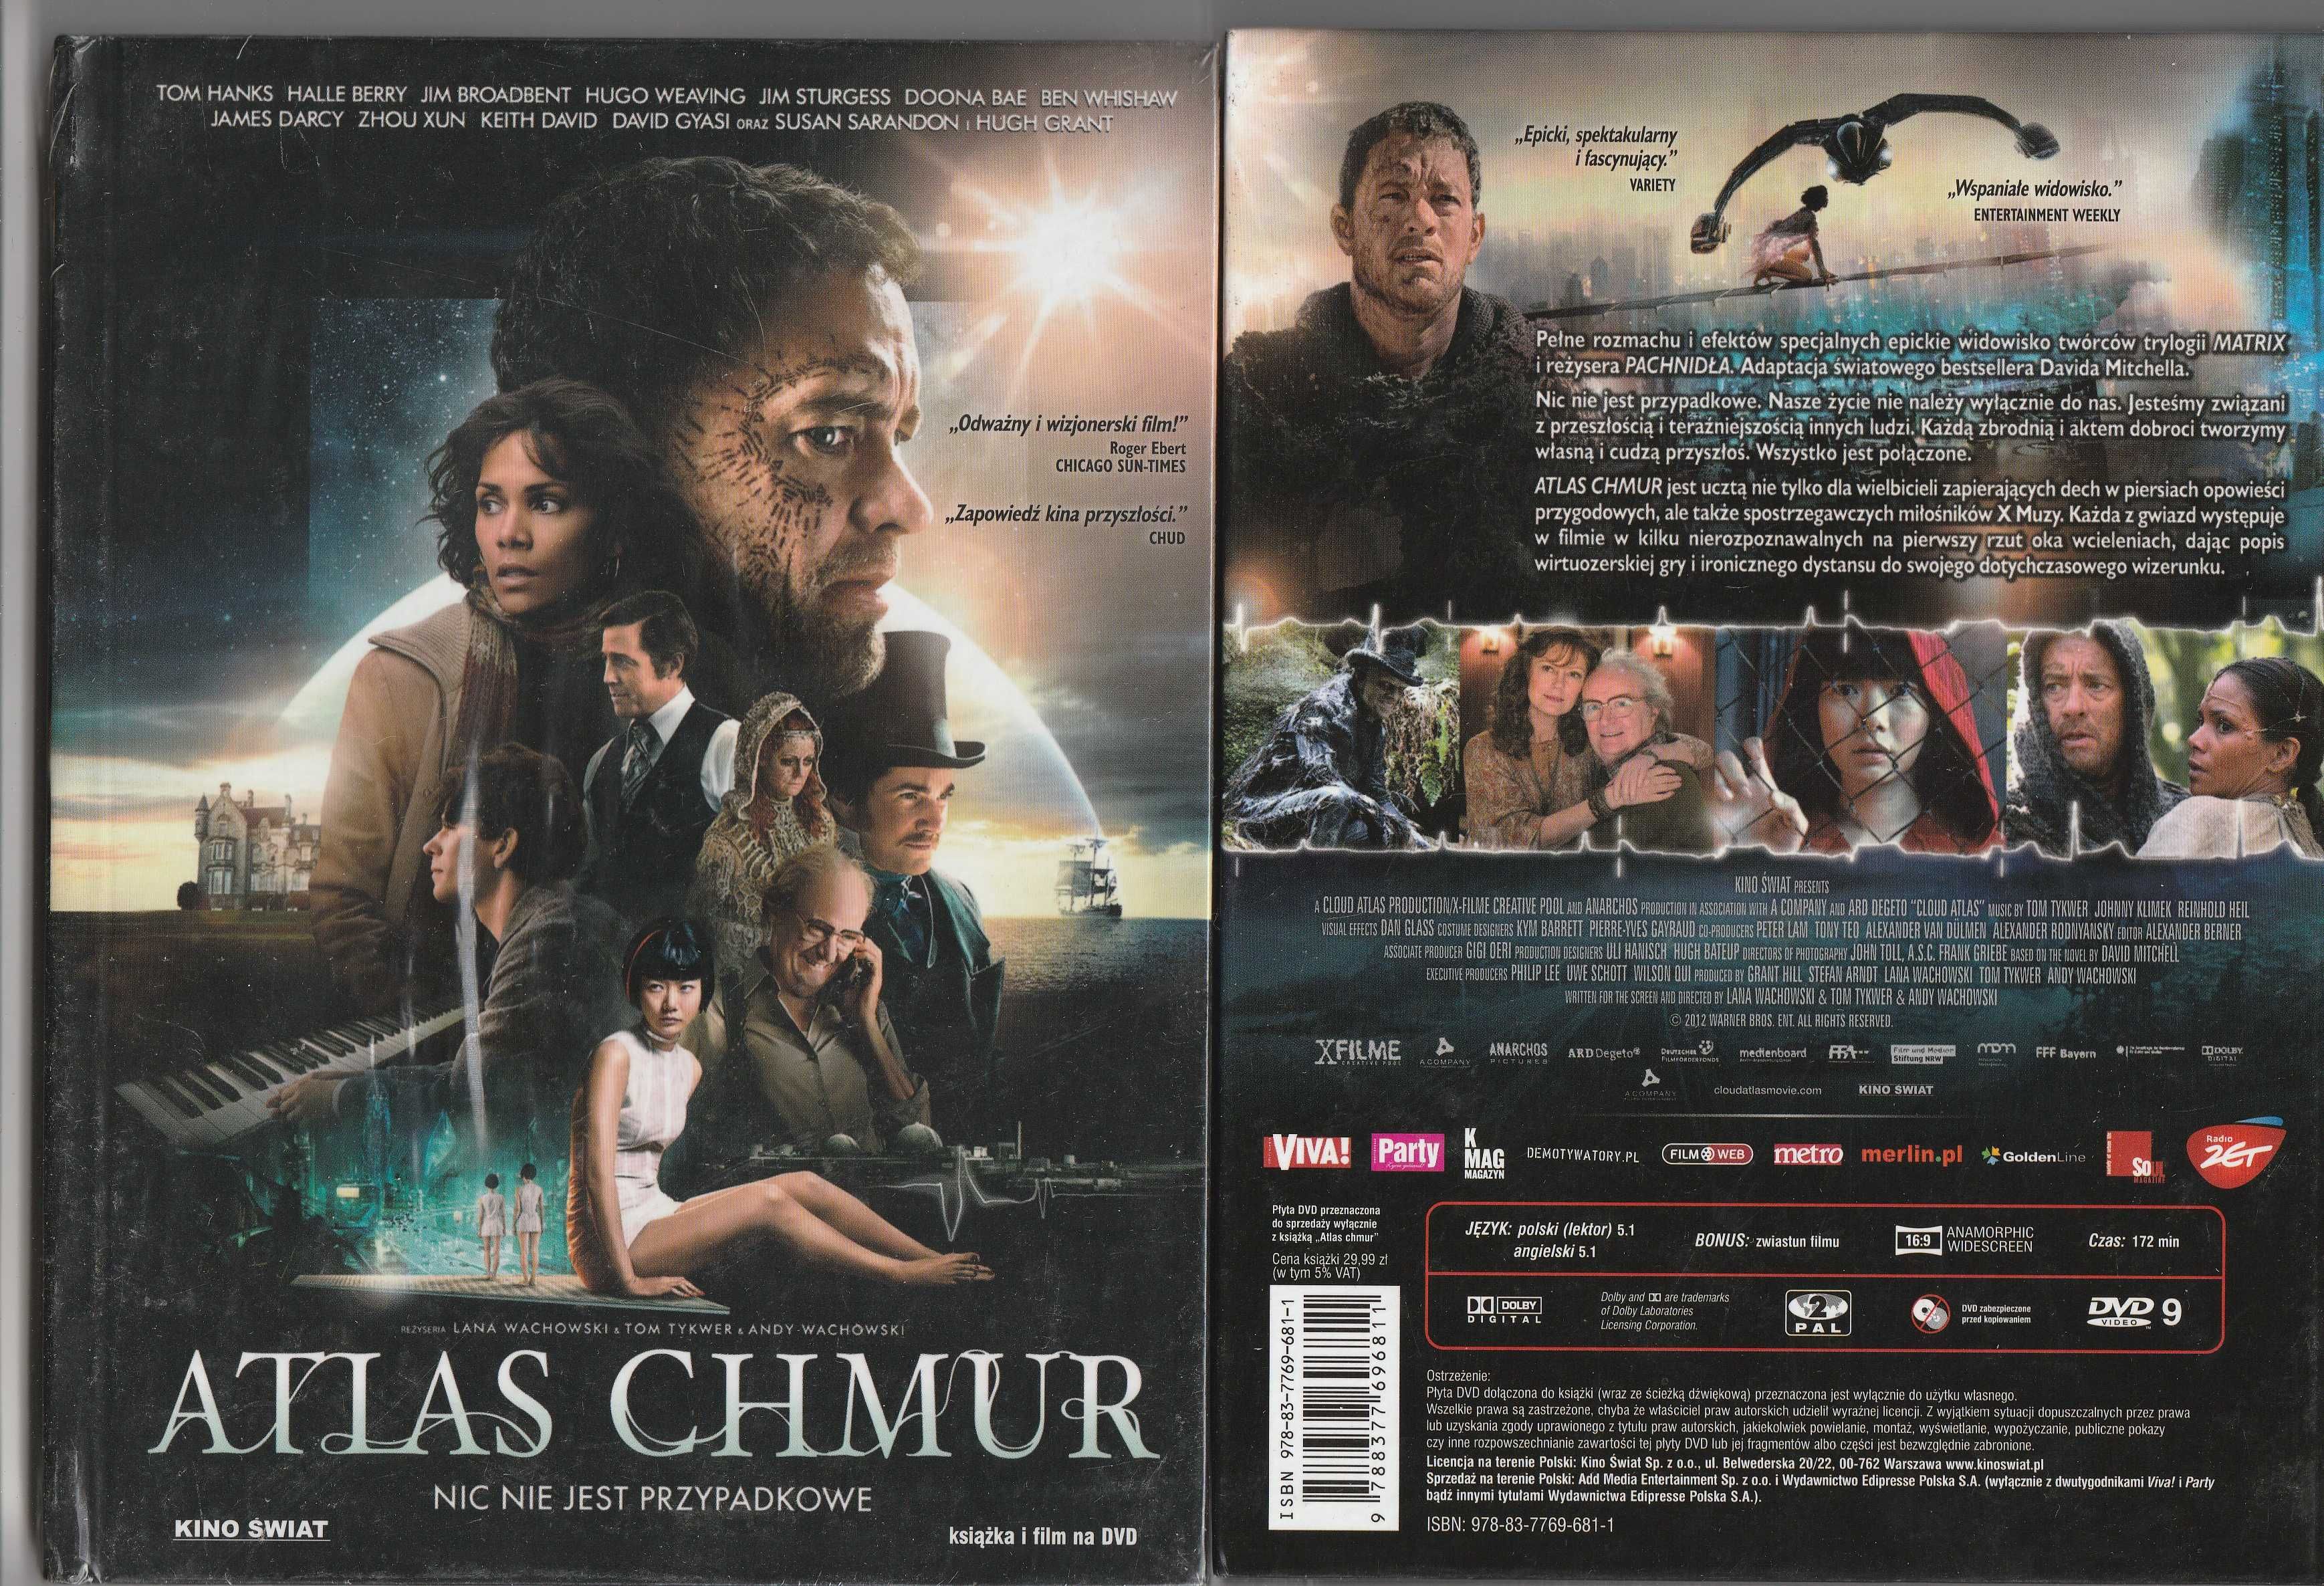 ATLAS CHMUR -Tom HANKS Wachowski dvd